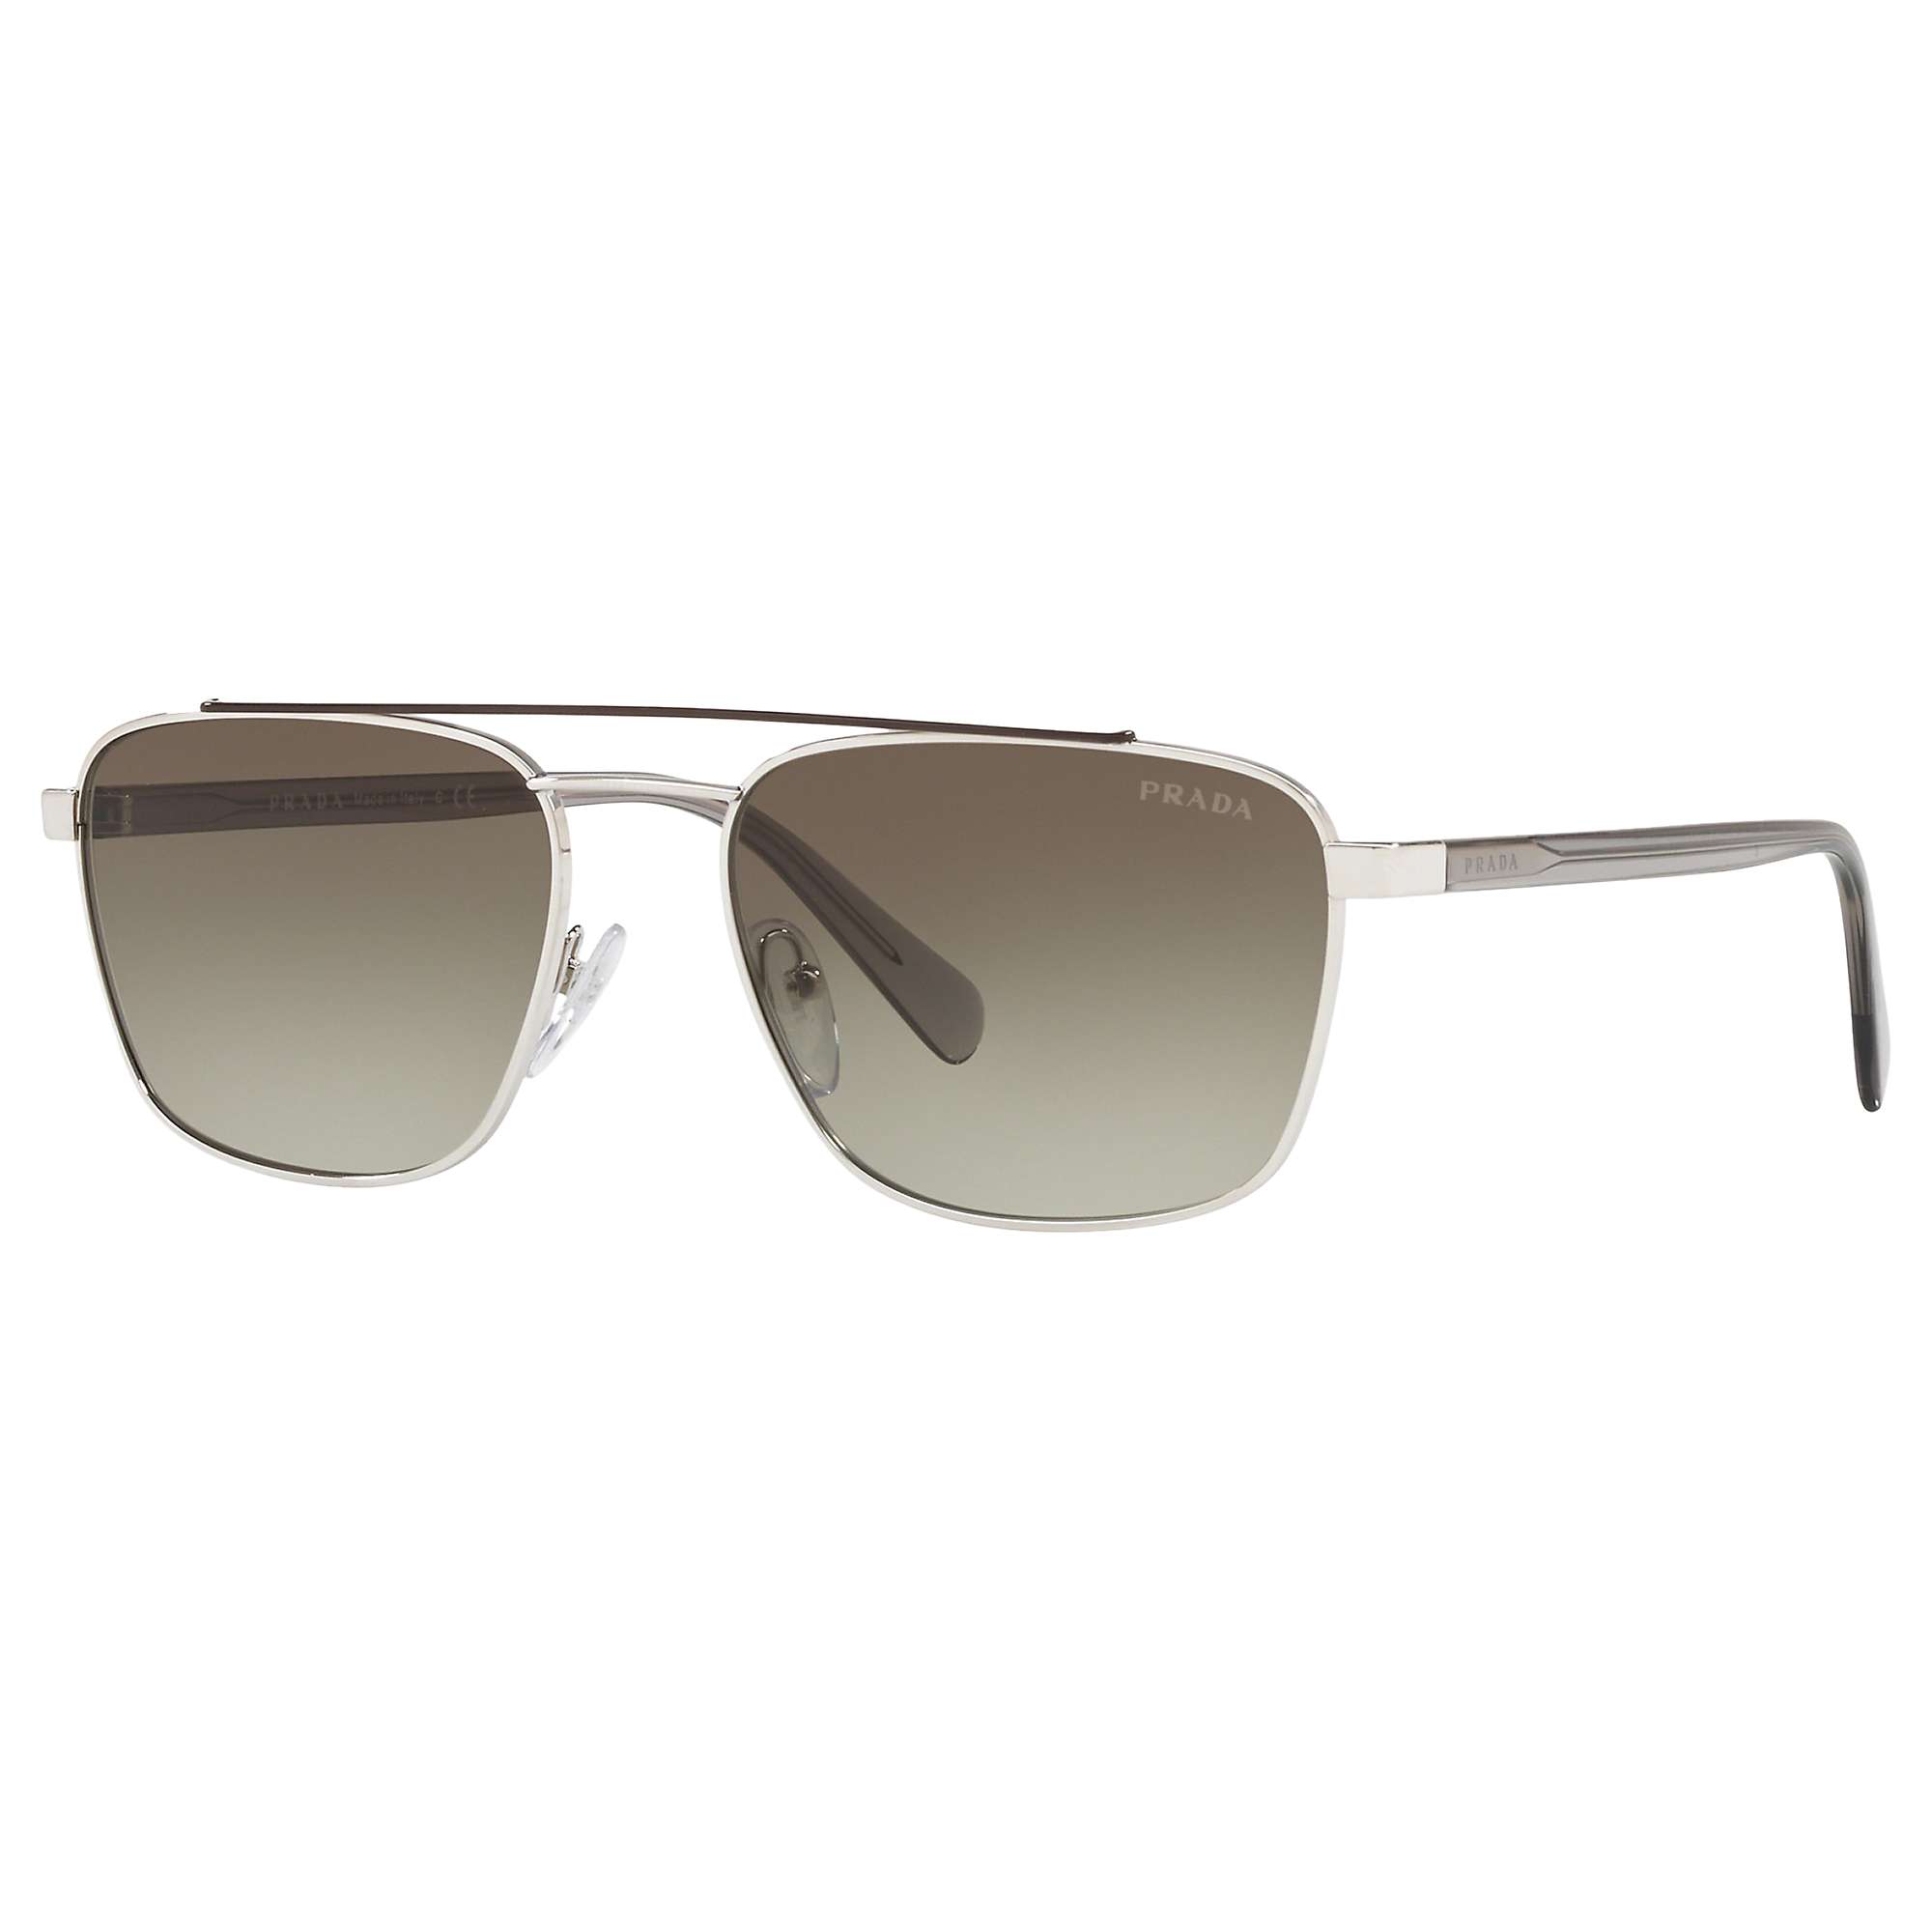 Prada PR 61US Men's Square Sunglasses, Silver/Green Gradient at John ...